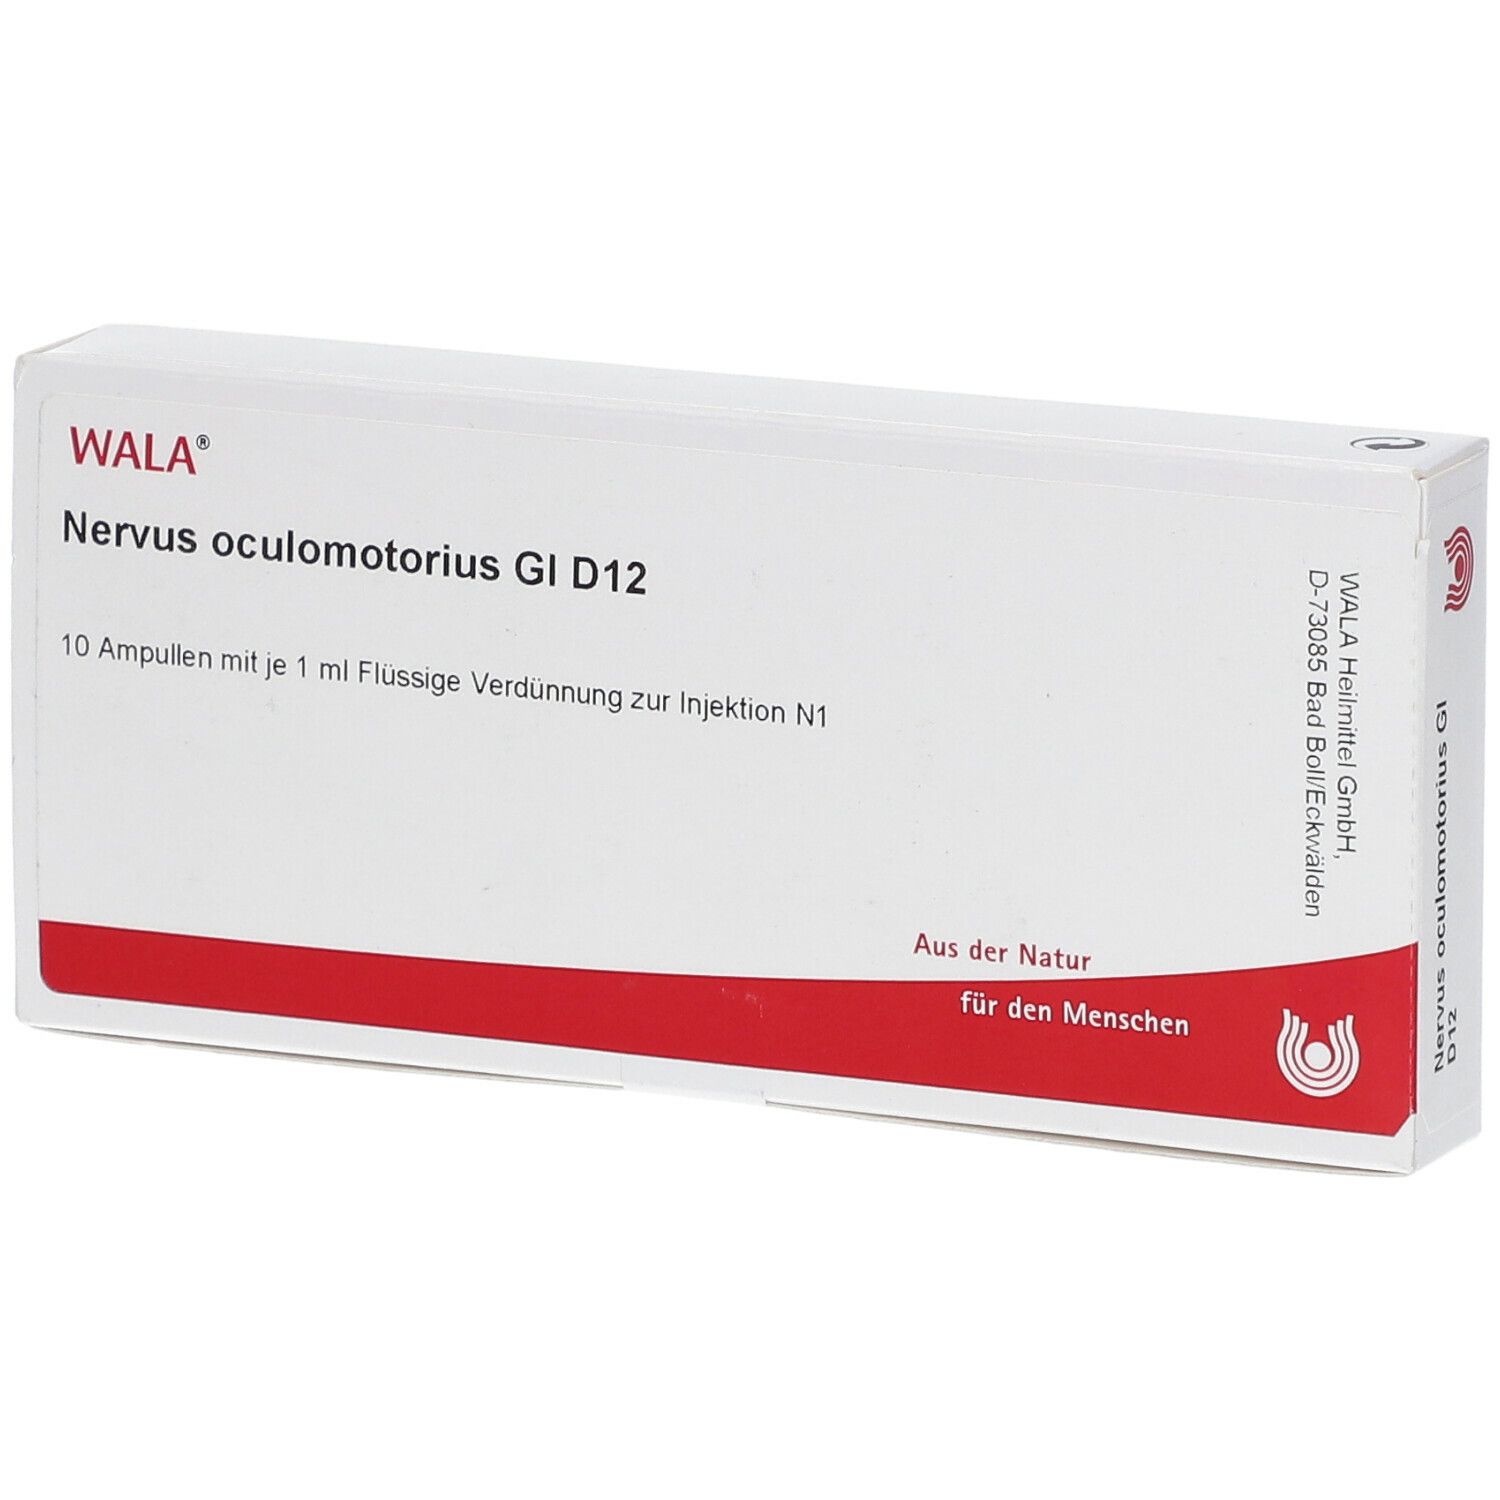 Wala® Nervus oculomotorius Gl D 12